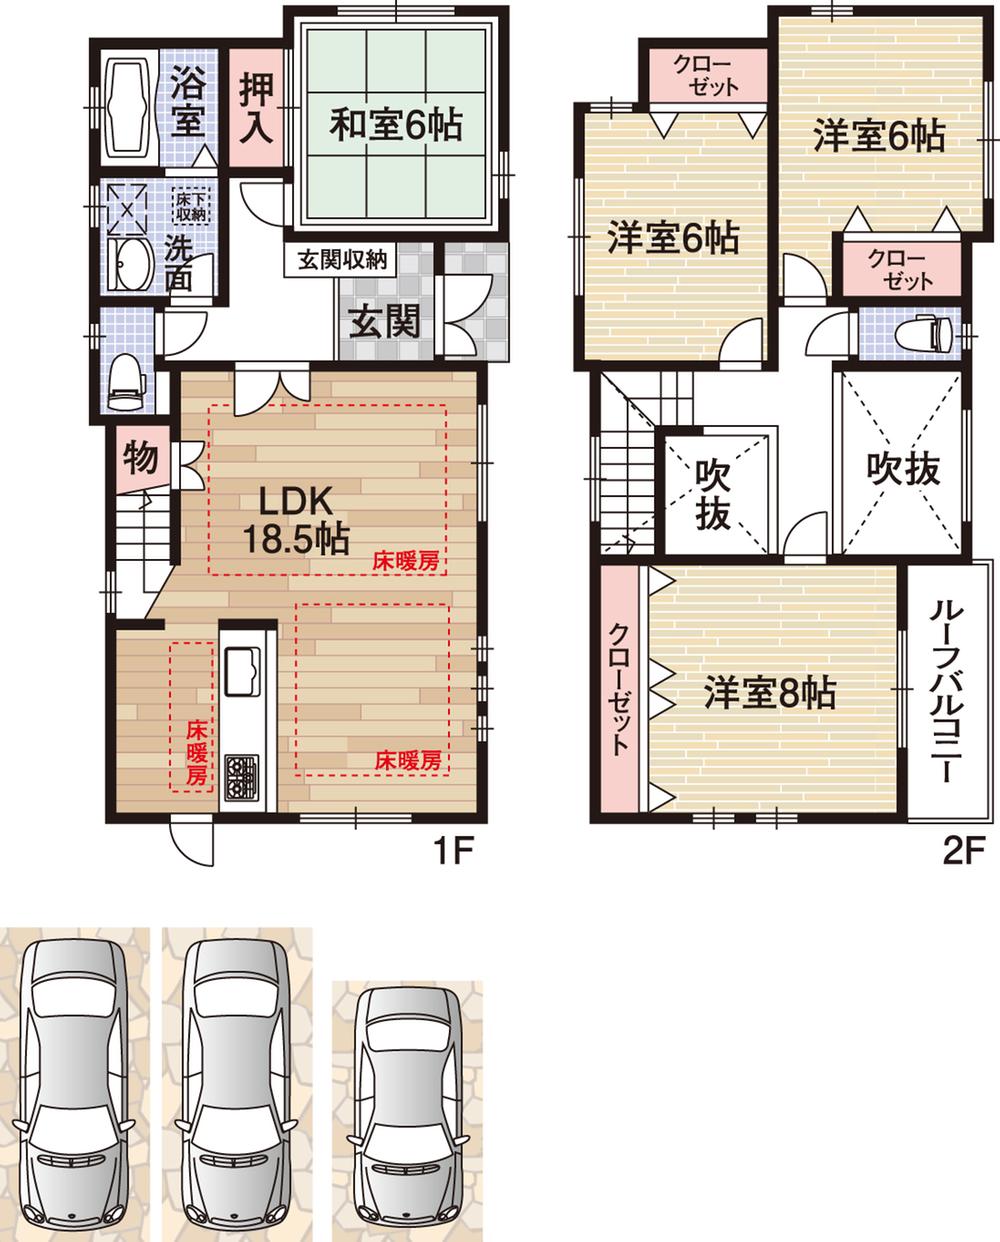 Floor plan. 43,450,000 yen, 4LDK, Land area 166.13 sq m , Building area 106.5 sq m